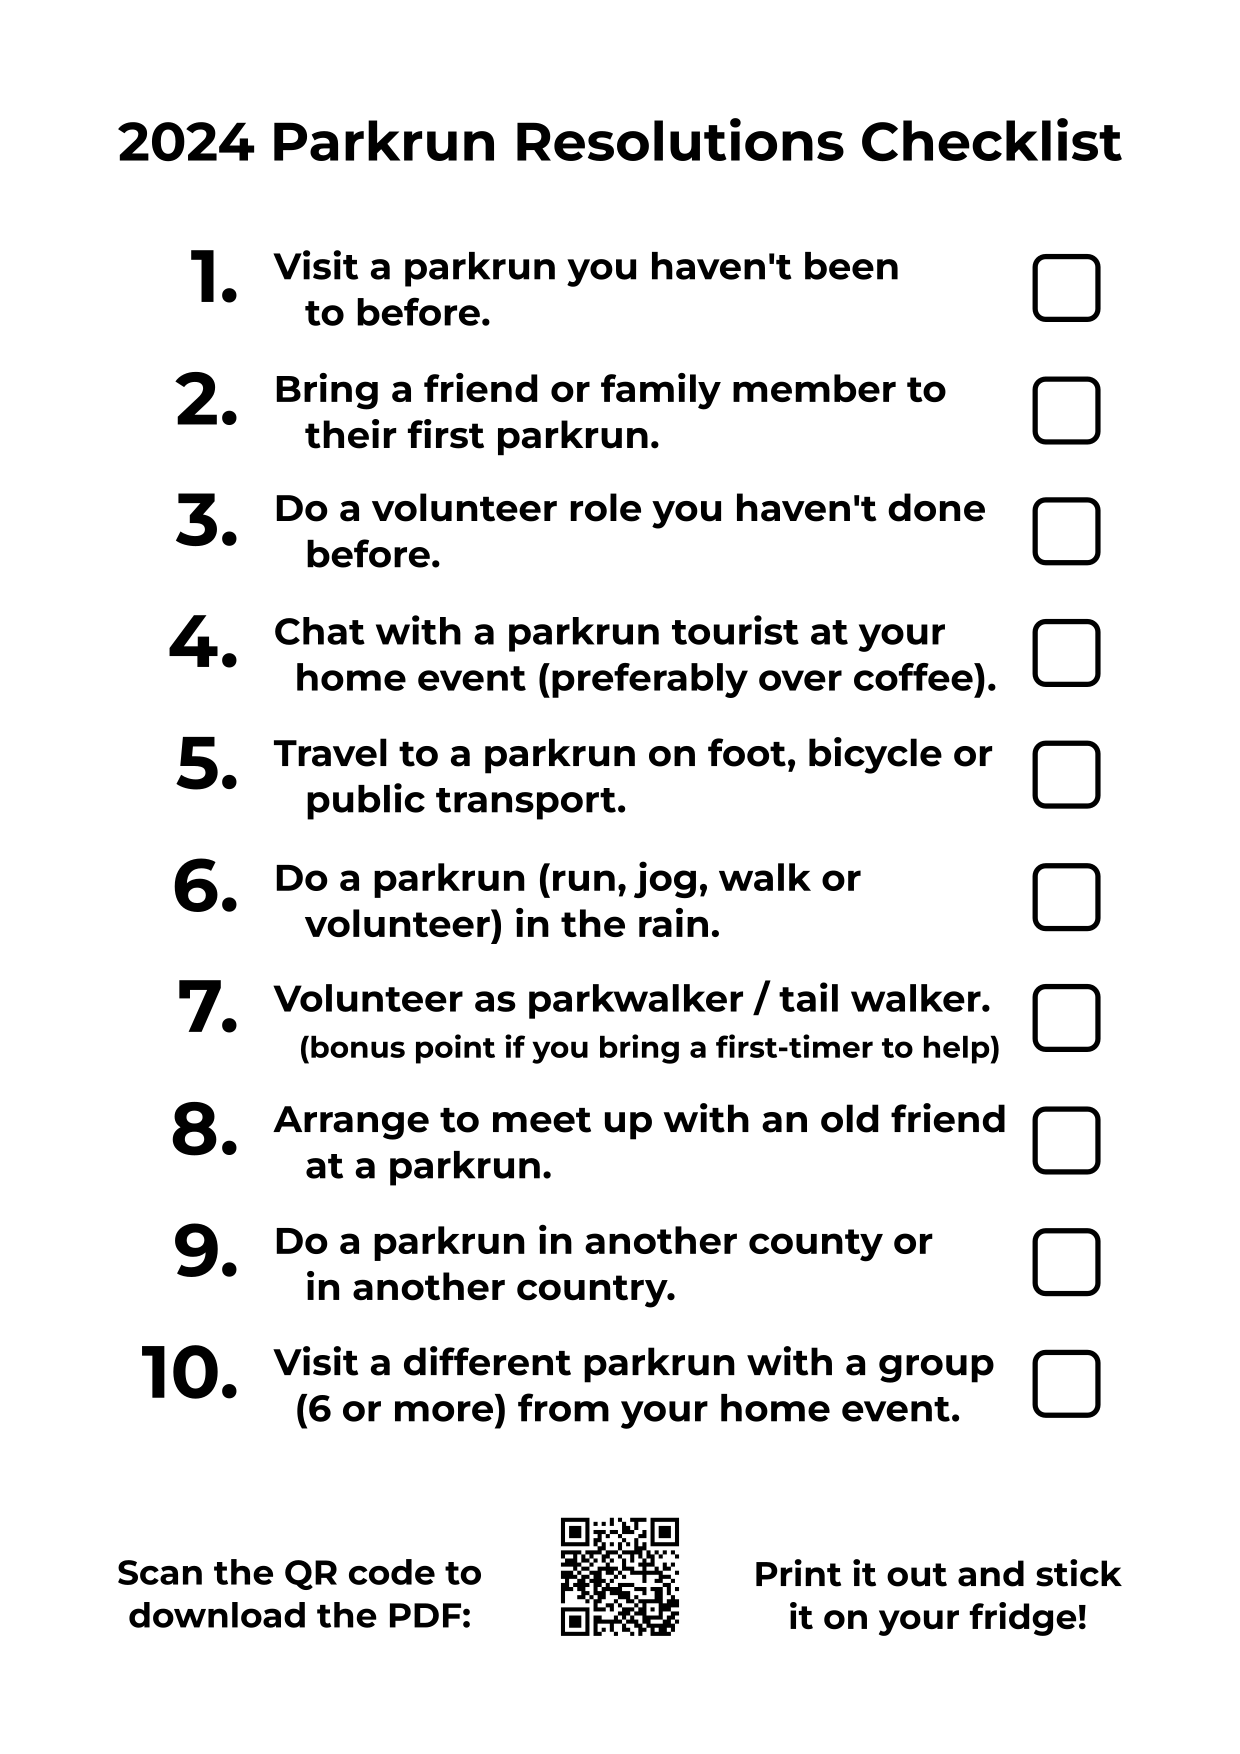 2024 parkrun resolutions checklist image